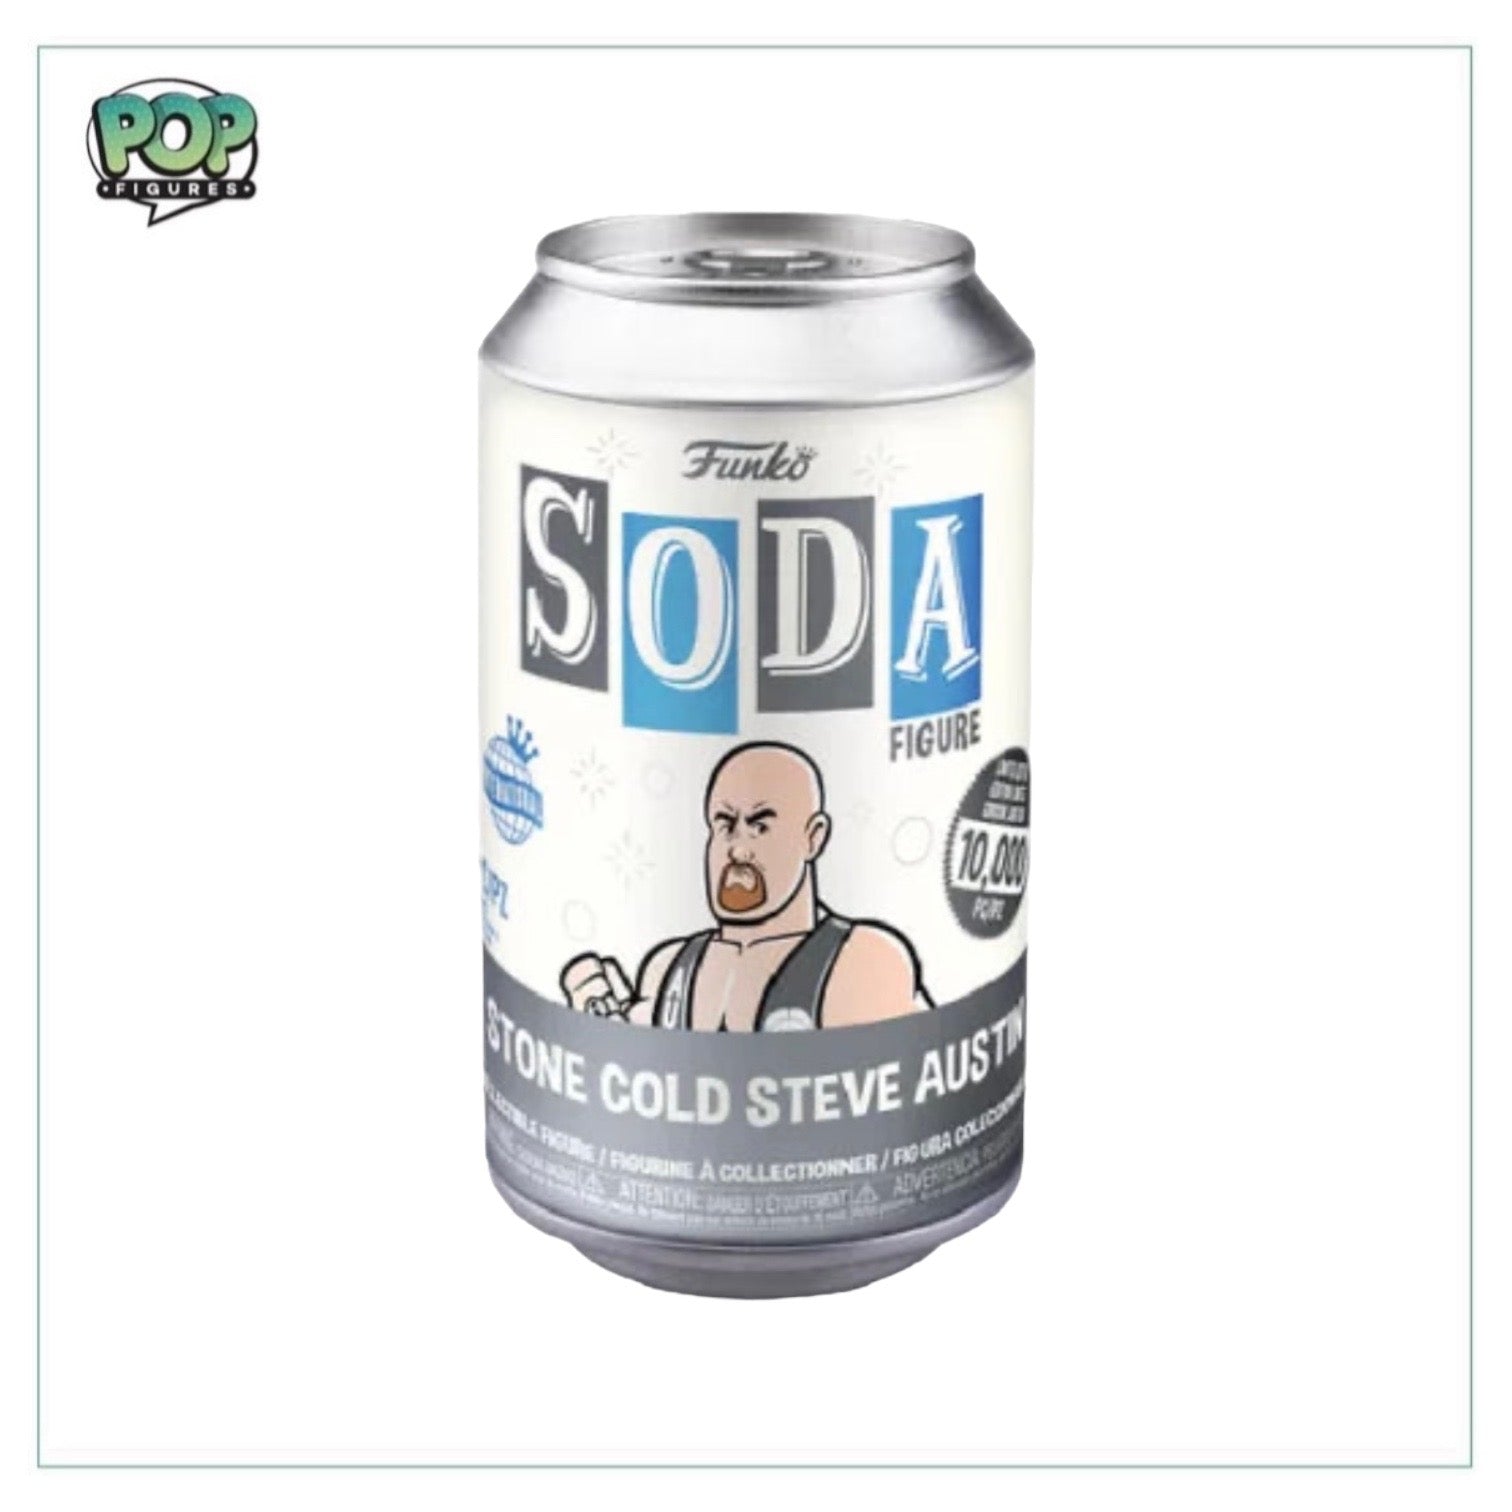 Stone Cold Steve Austin Funko Soda Vinyl Figure! - WWE - International LE10000 Pcs - Chance of Chase